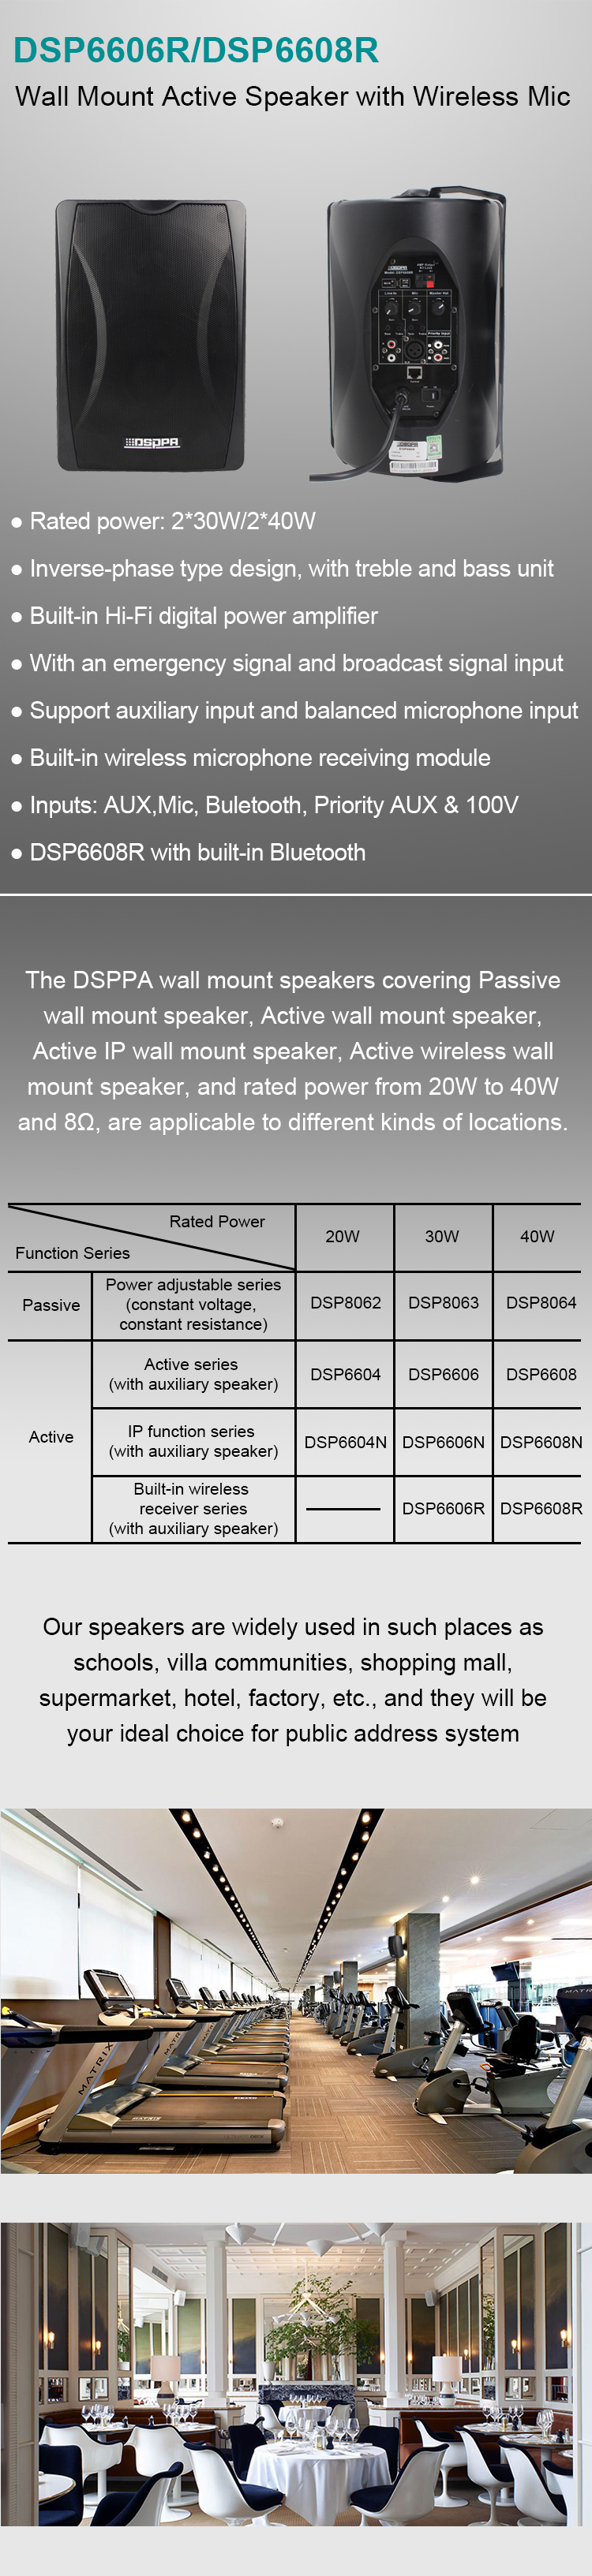 DSP8062 Wall Mount Speaker